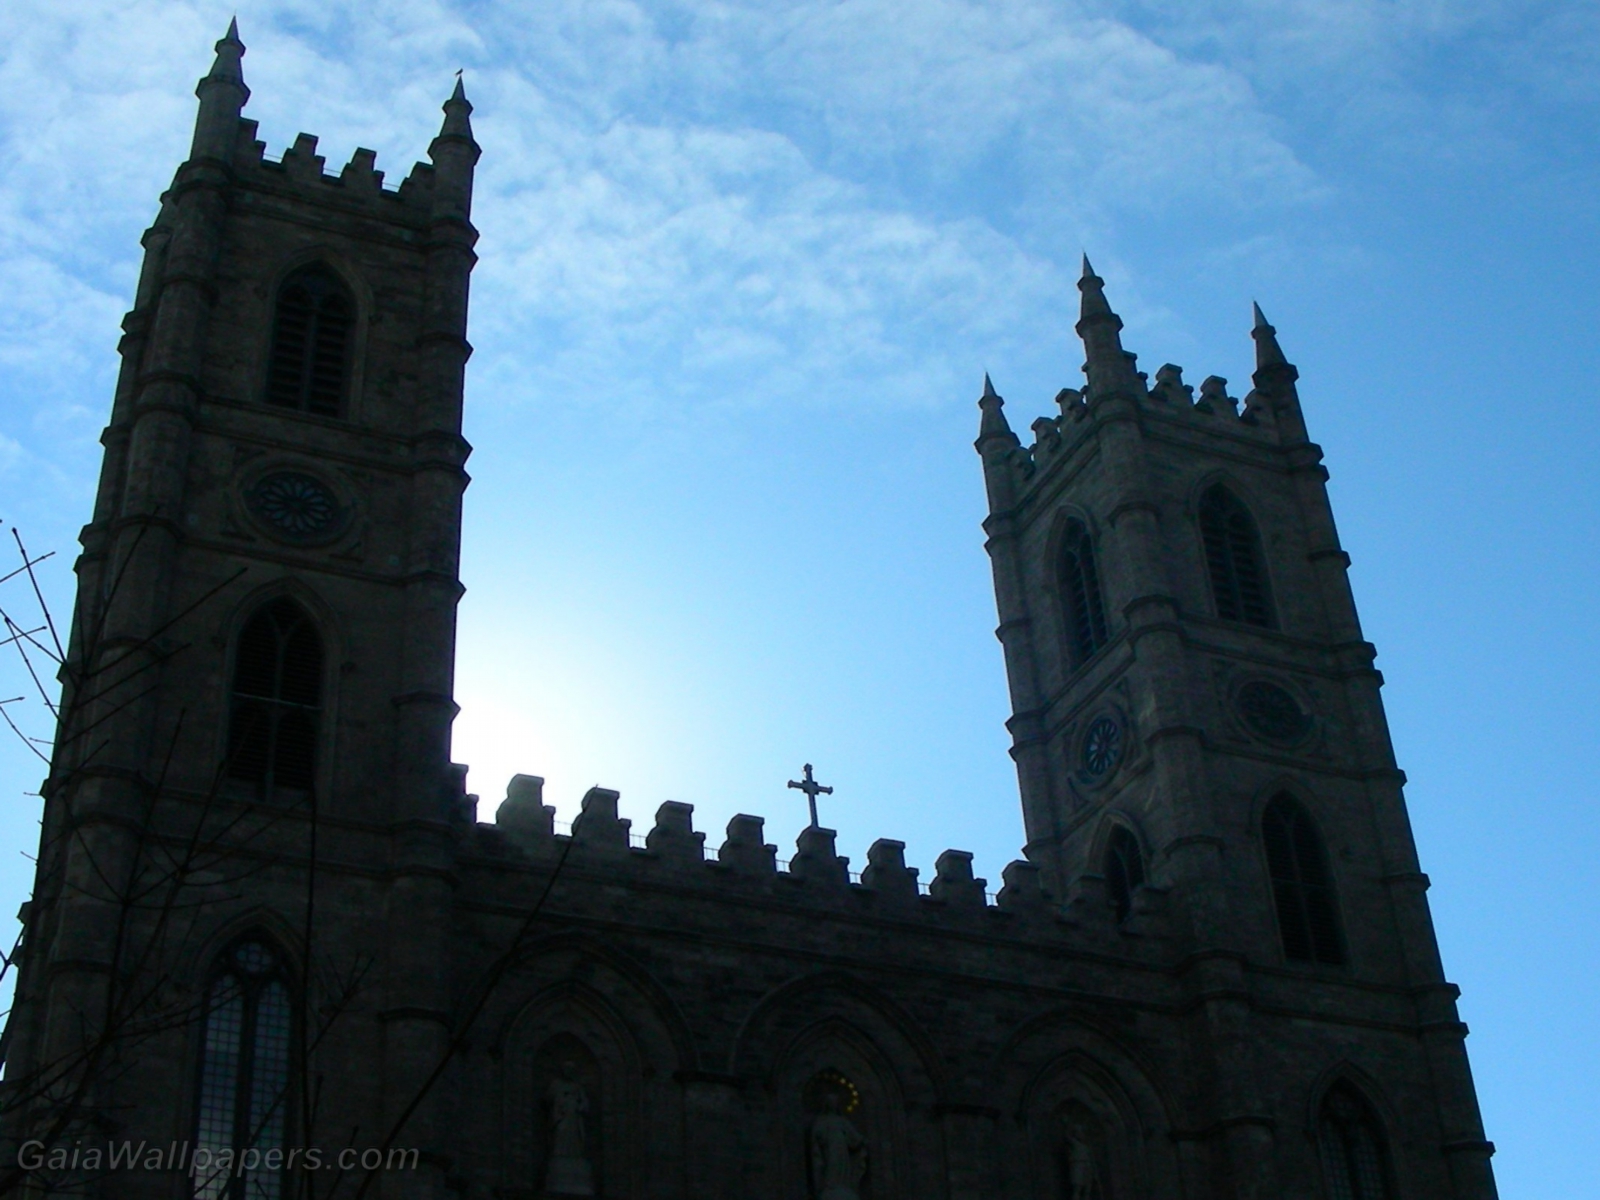 Sun behind Notre-Dame Basilica, Montreal - Free desktop wallpapers